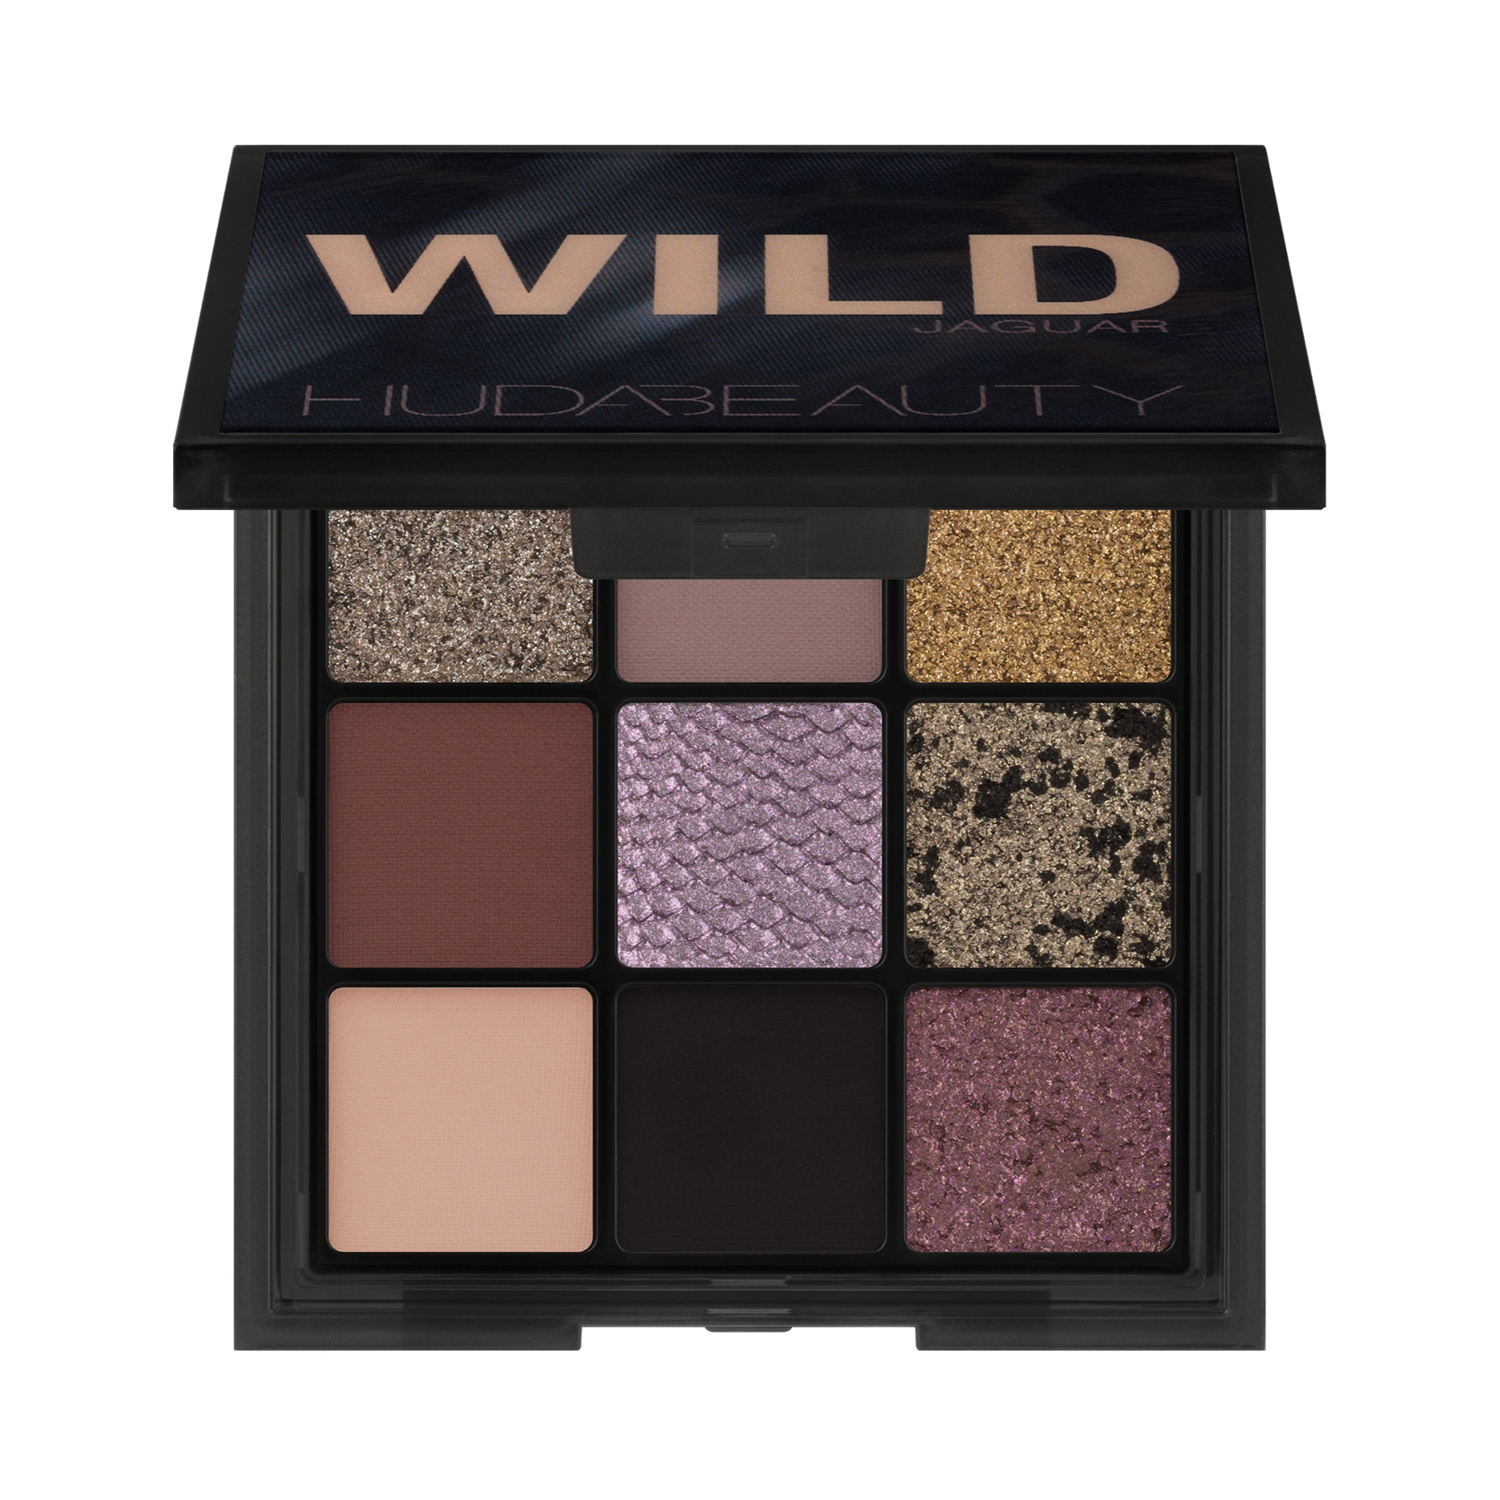 Huda Beauty Wild Obsessions Eyeshadow Palette - Jaguar (7.5g)